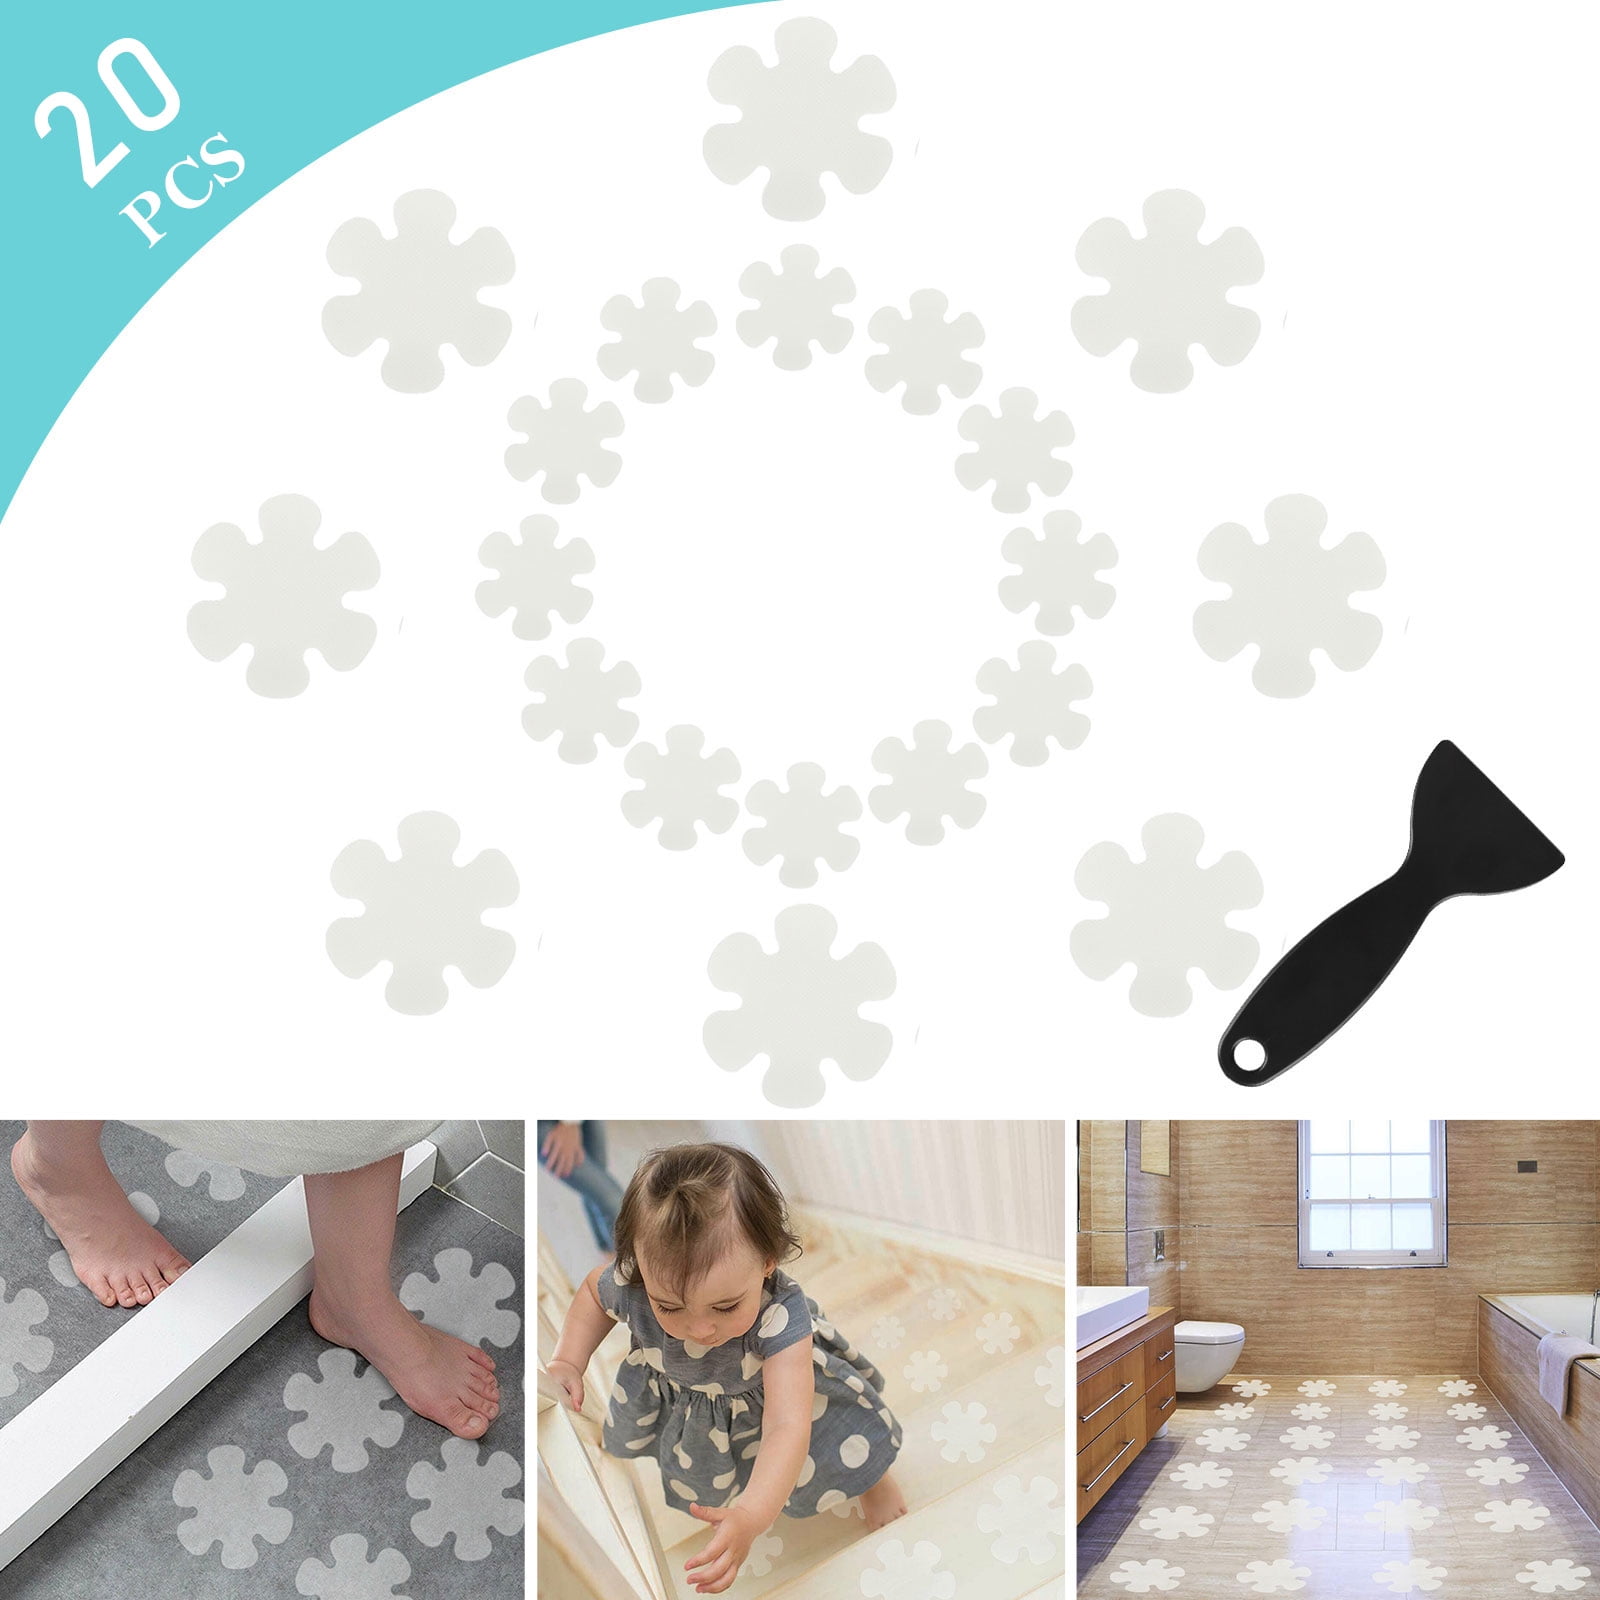 20 Pcs Safety Flower Treads Non-Slip Applique Sticker Pads Bath Tub&Shower Decal 